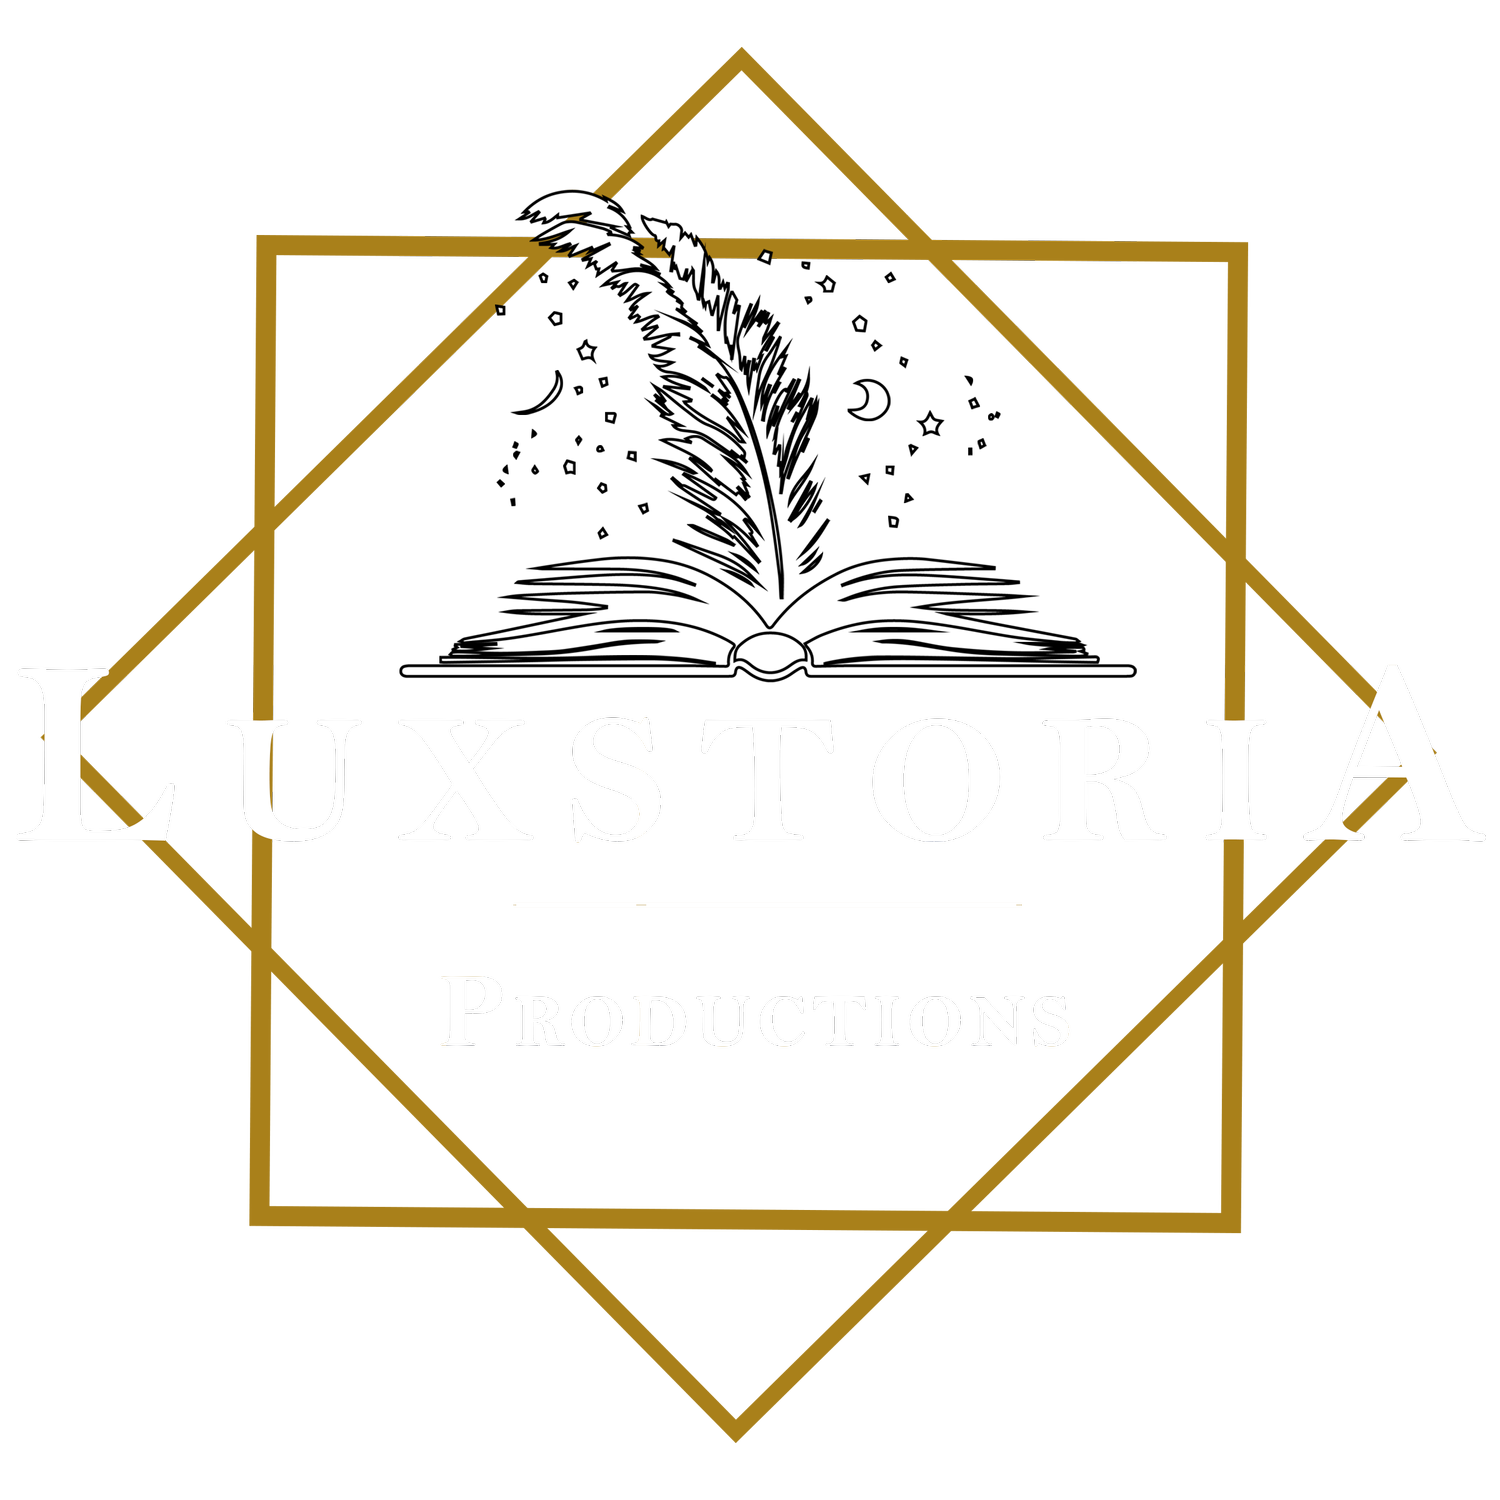 Luxstoria Productions